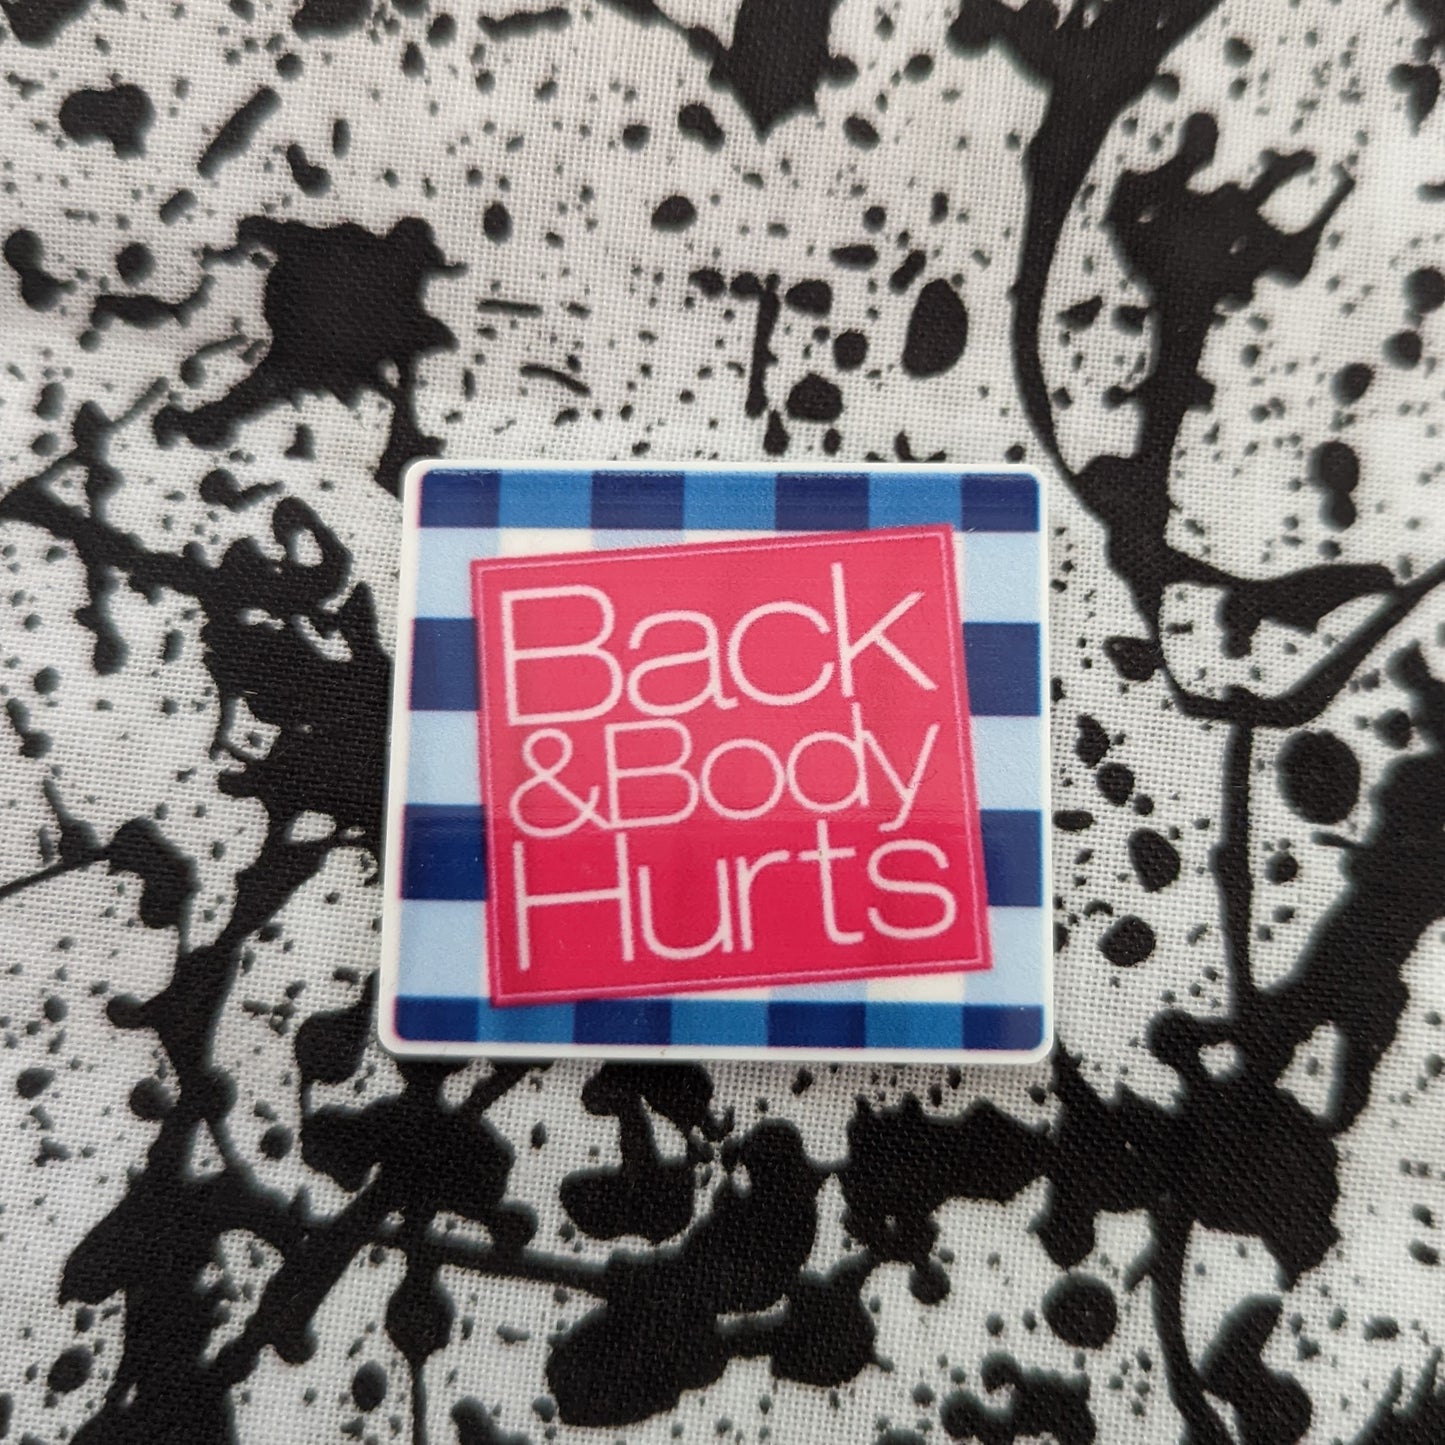 Back & Body Hurts pin